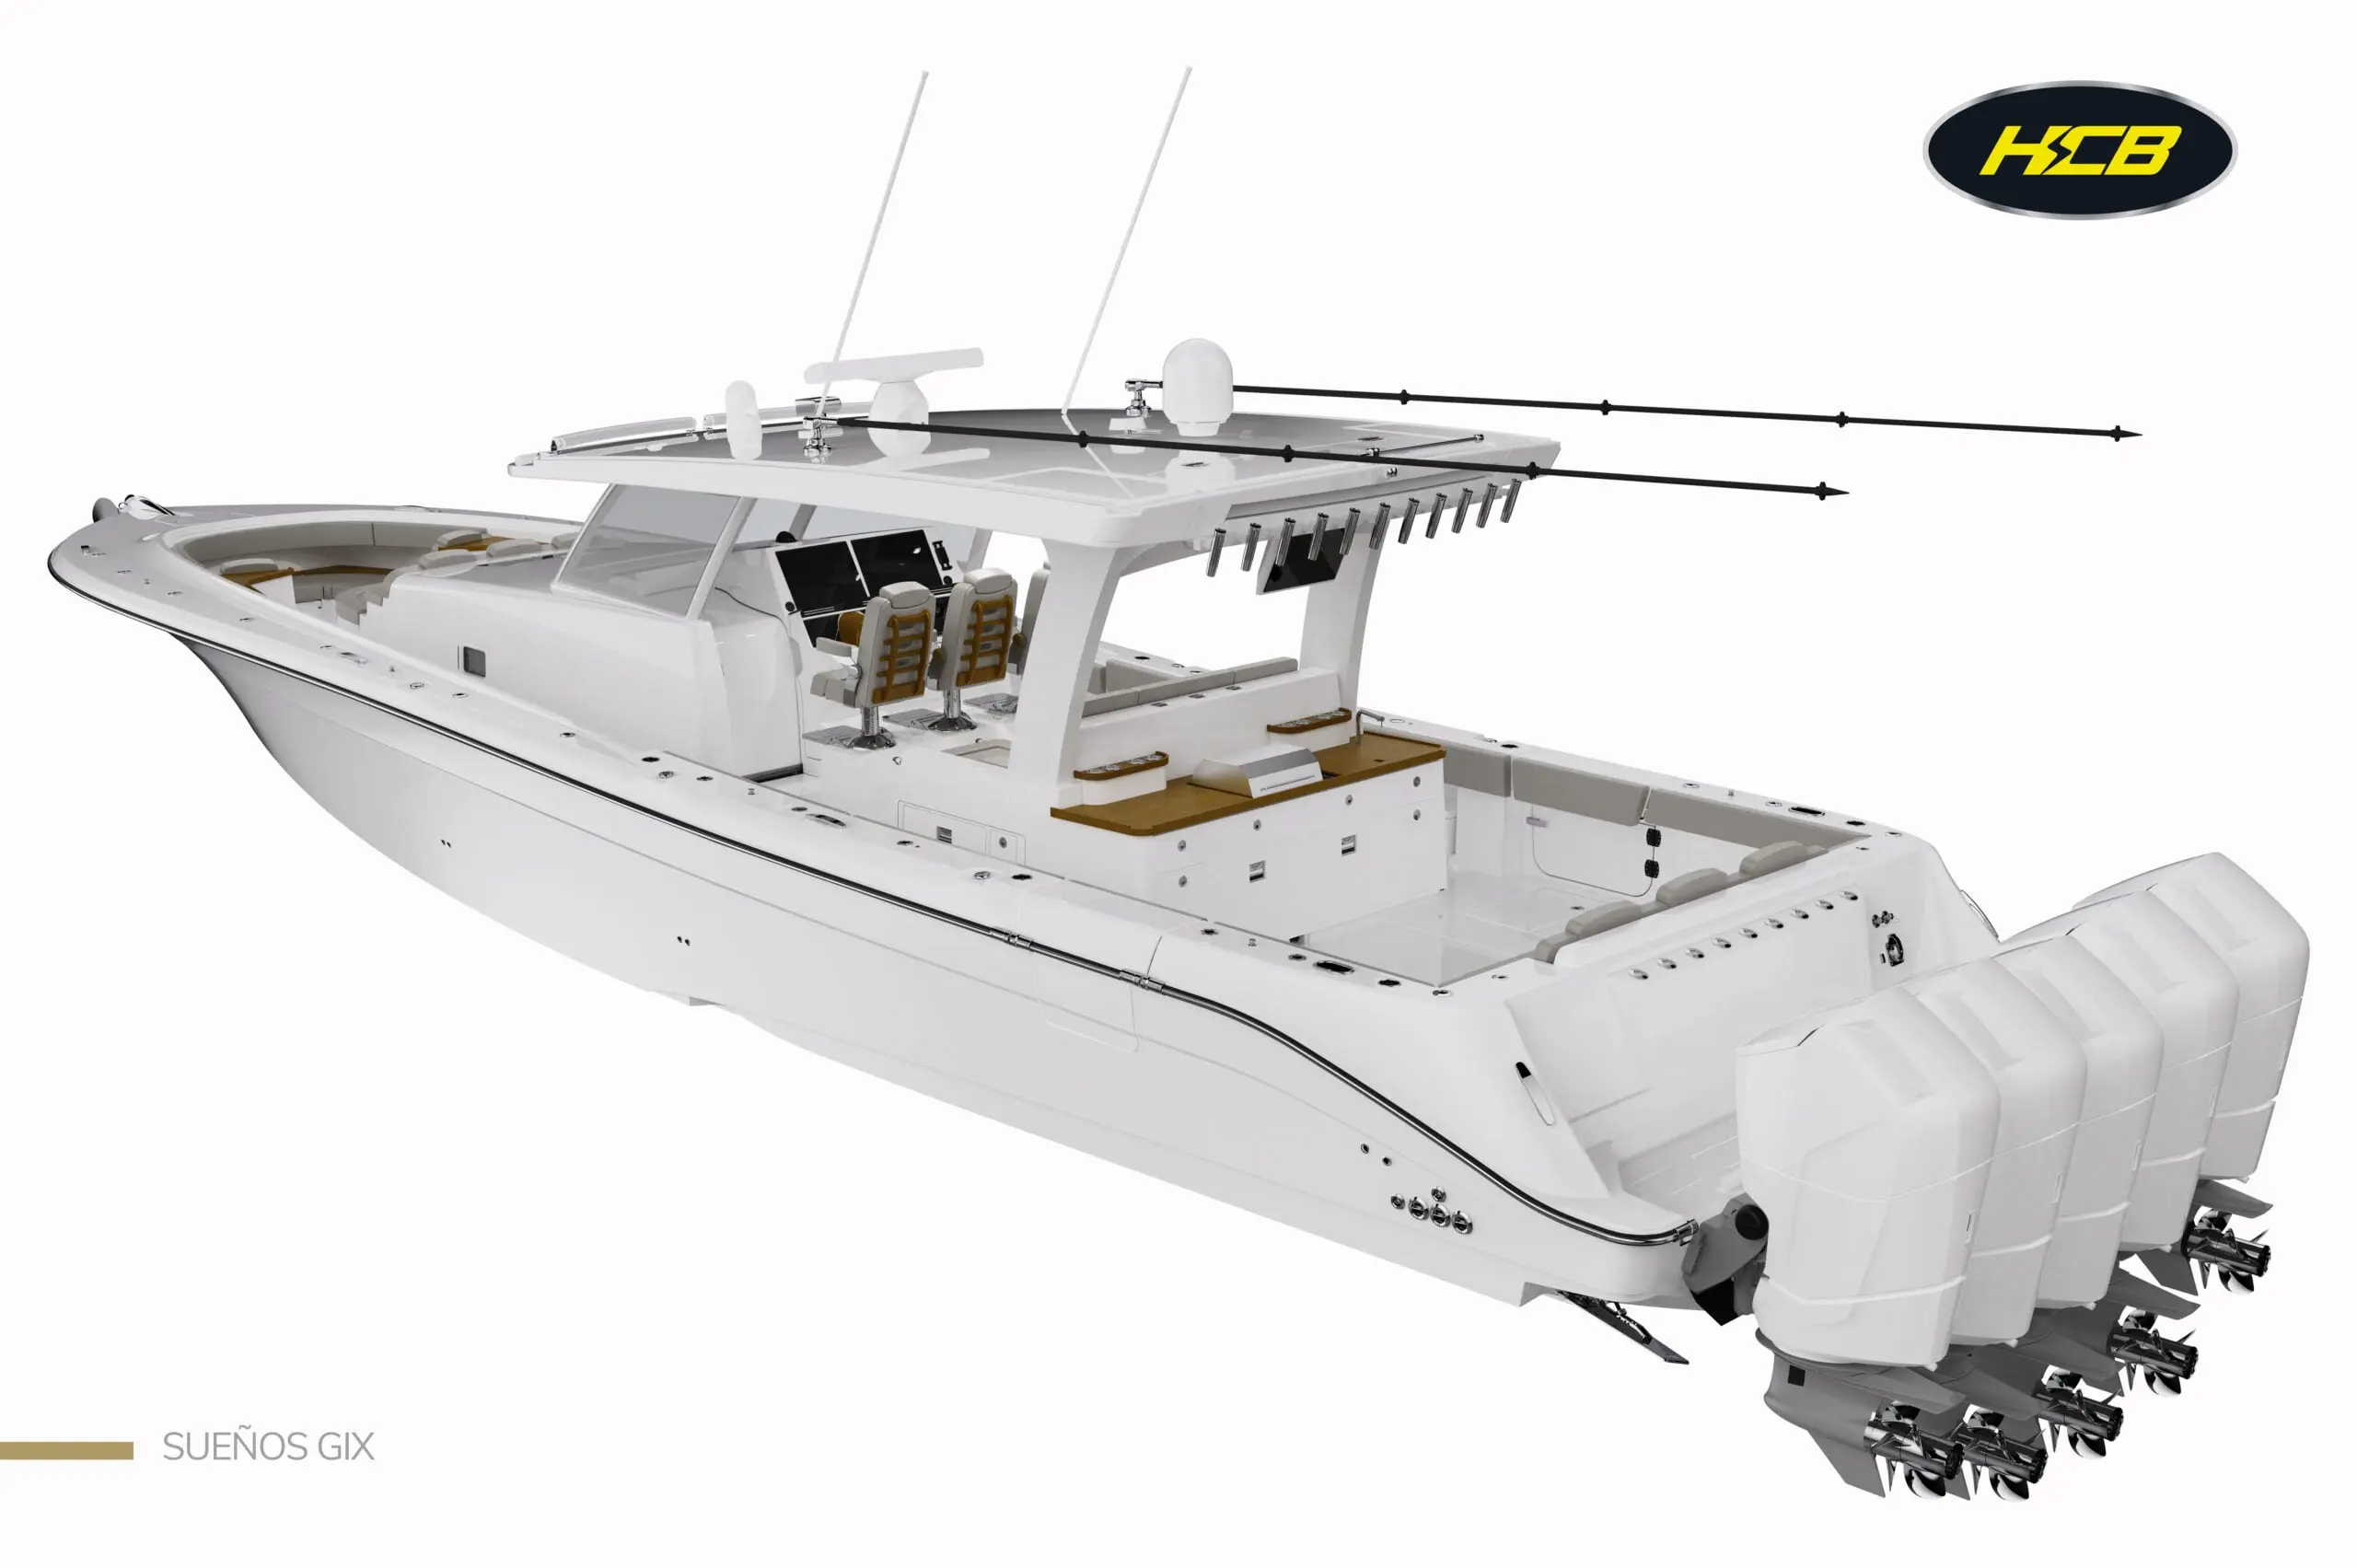 About Maritimo - Australia's Premier Luxury Yacht Builder & Manufacturer